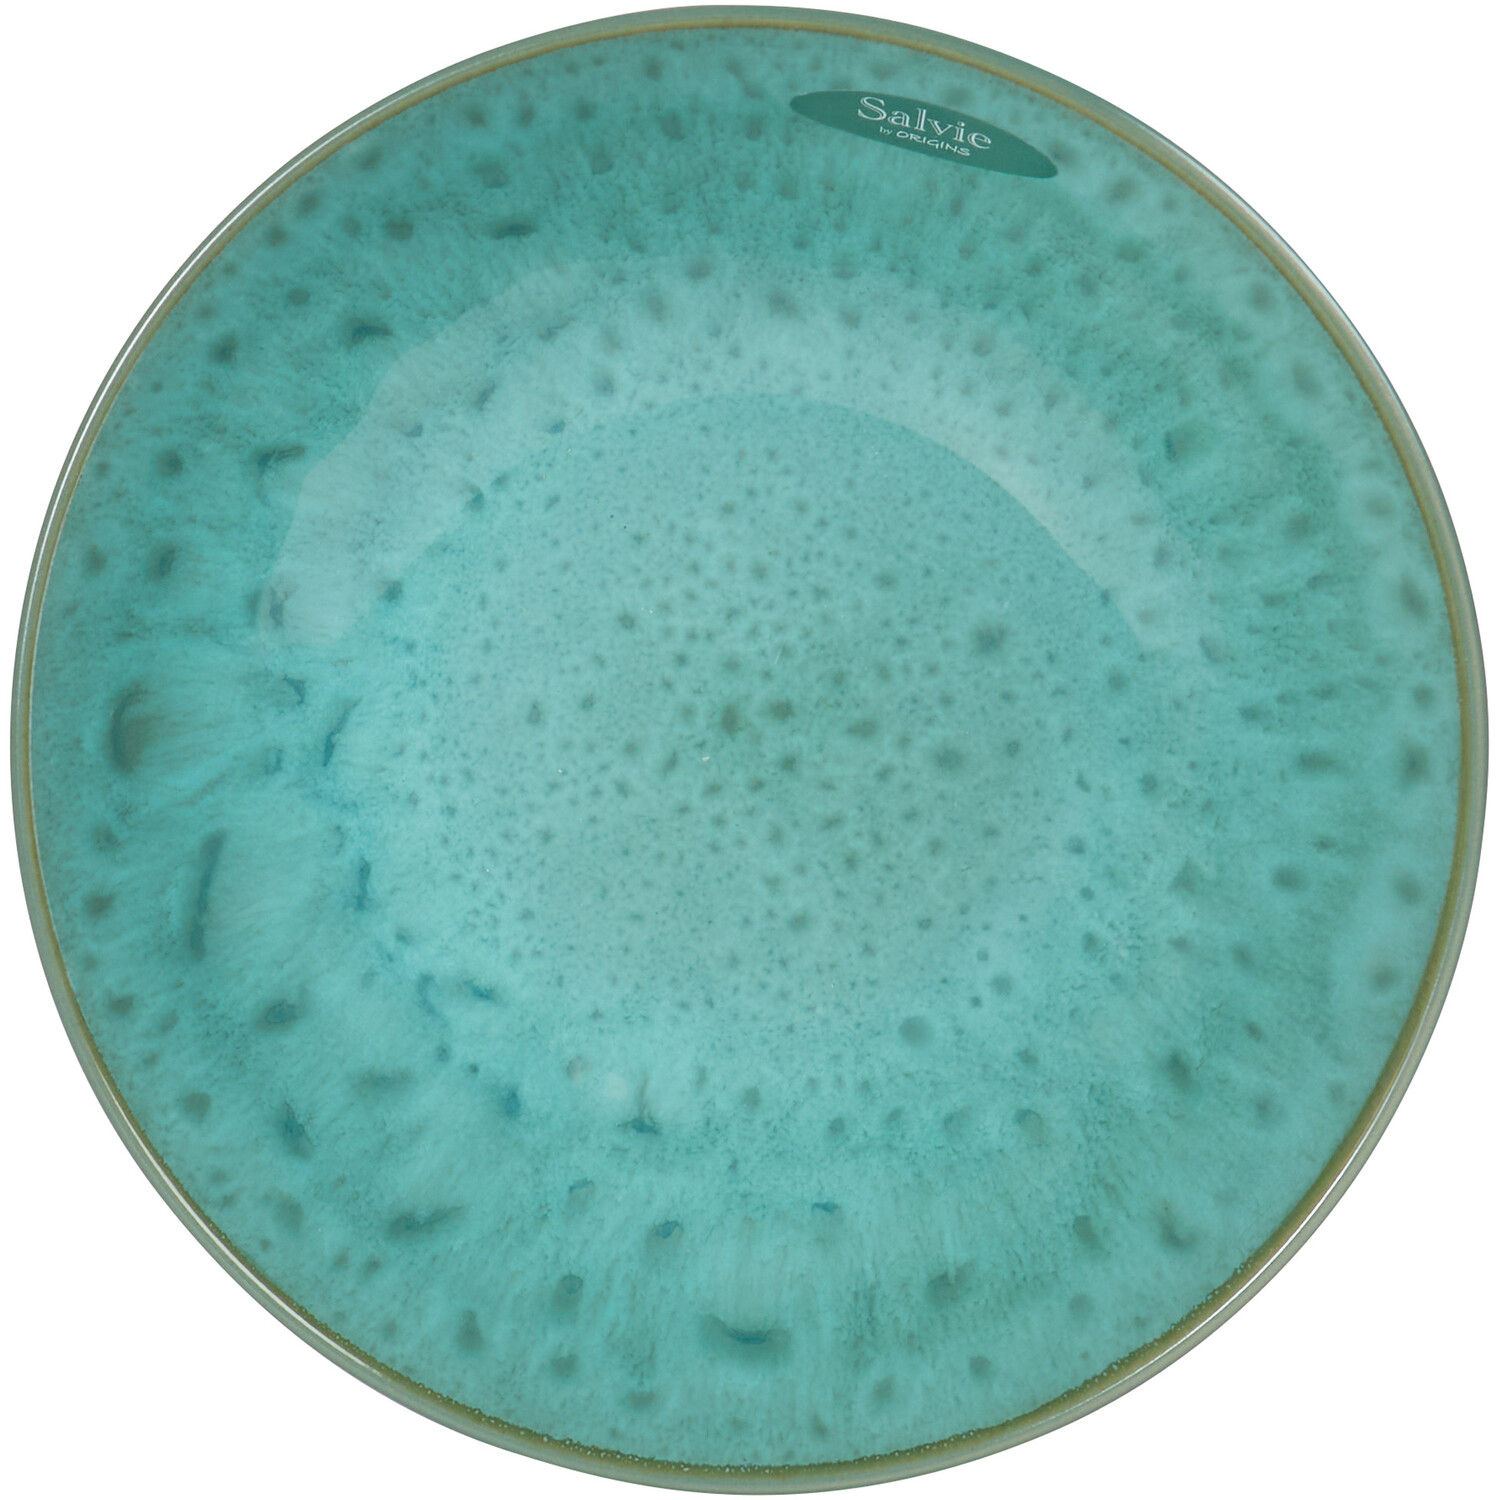 Salvie Reactive Glaze Pasta Bowl - Sea Green Image 2